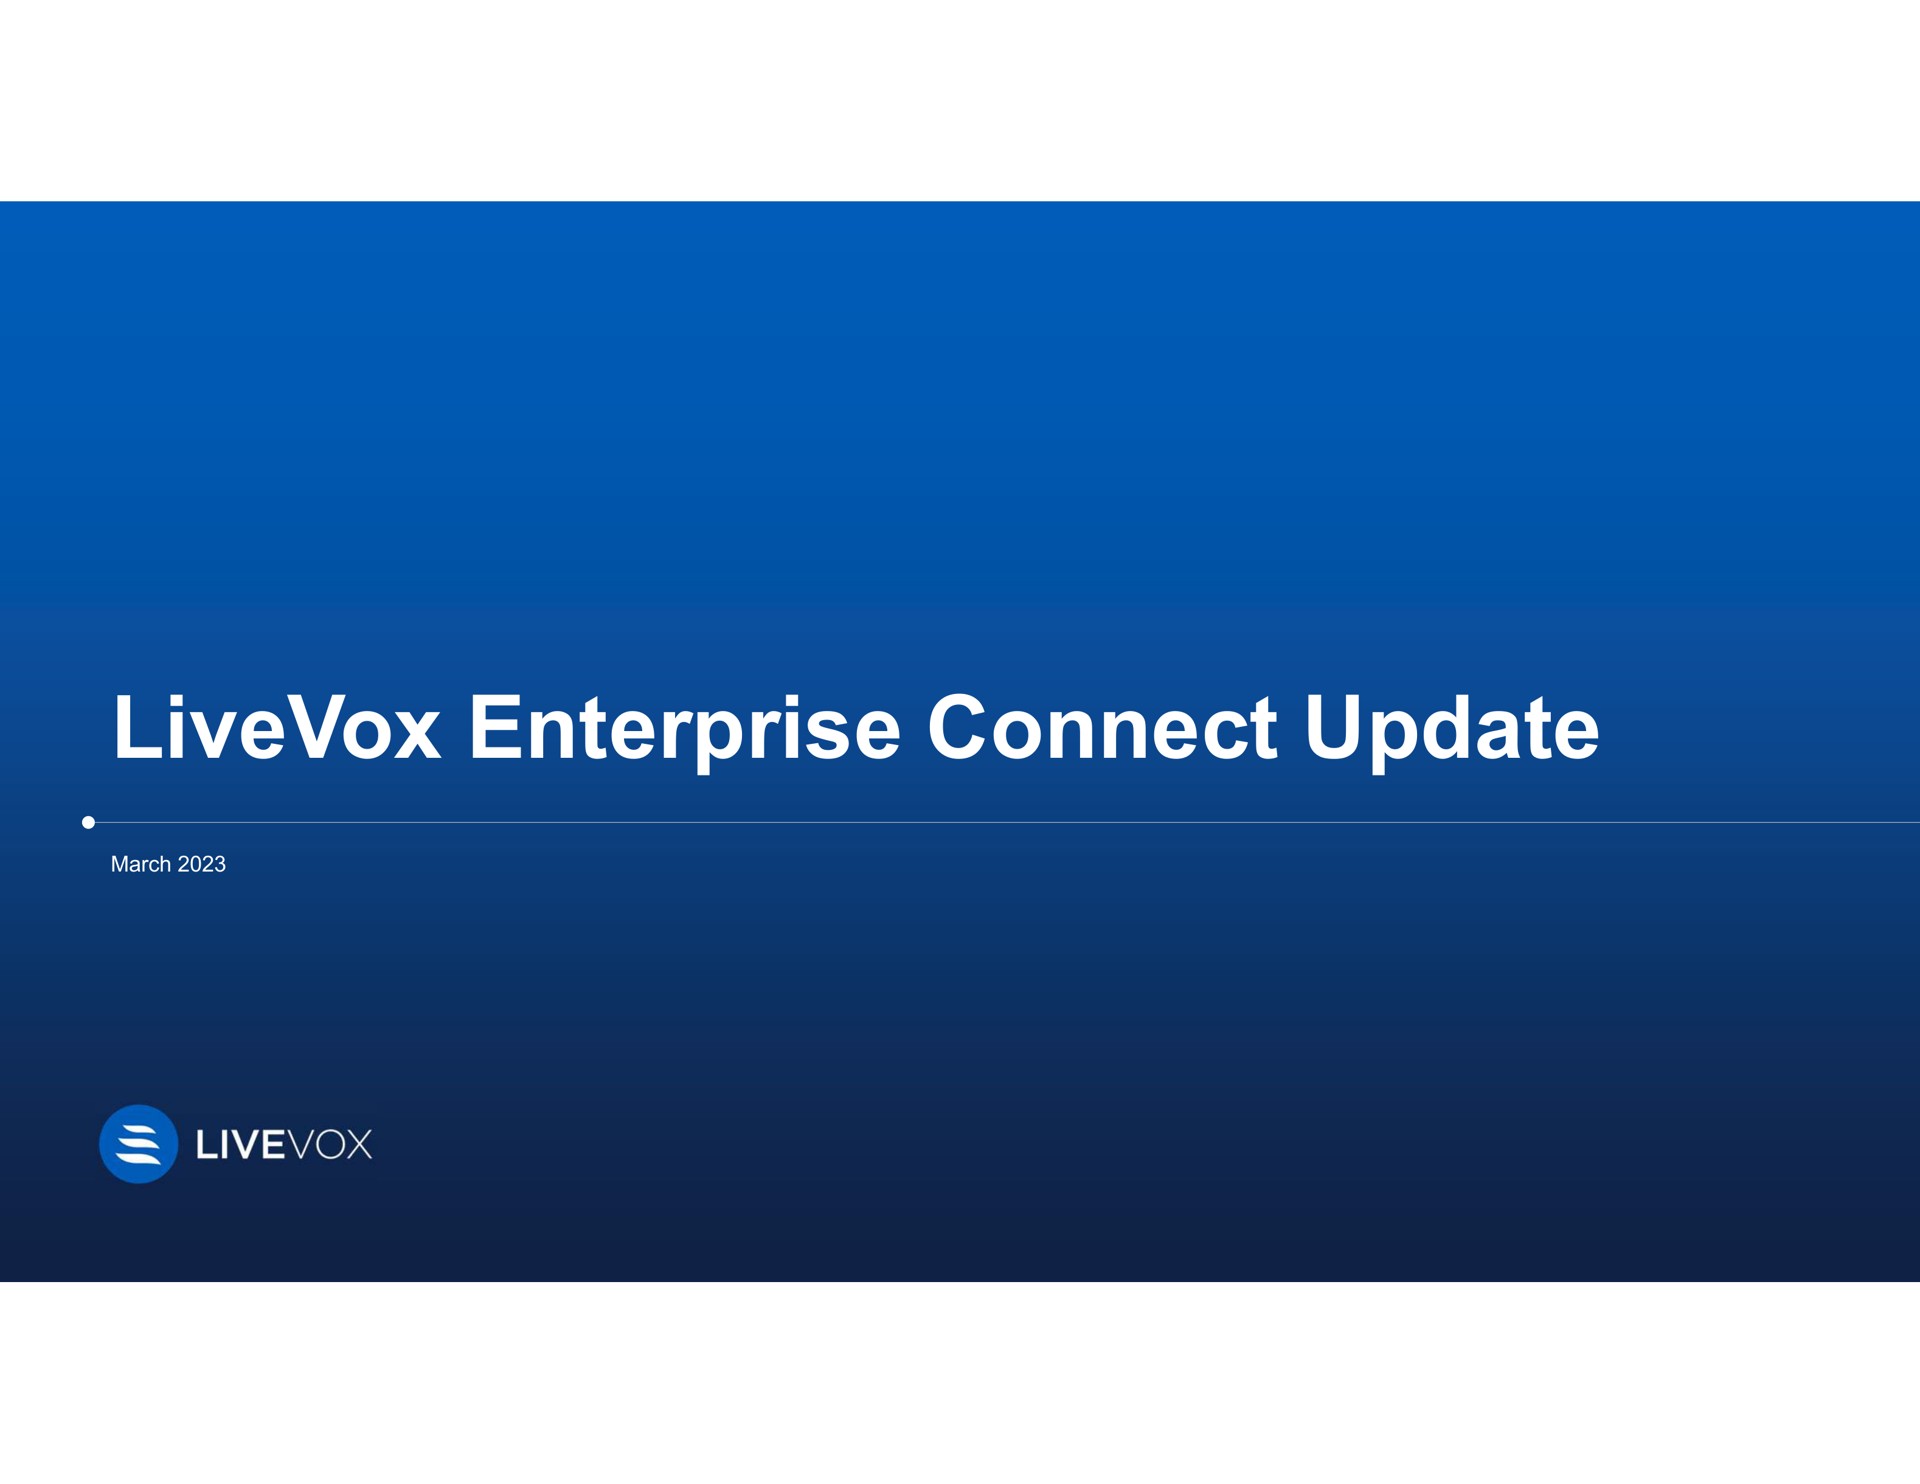 enterprise connect update be | LiveVox